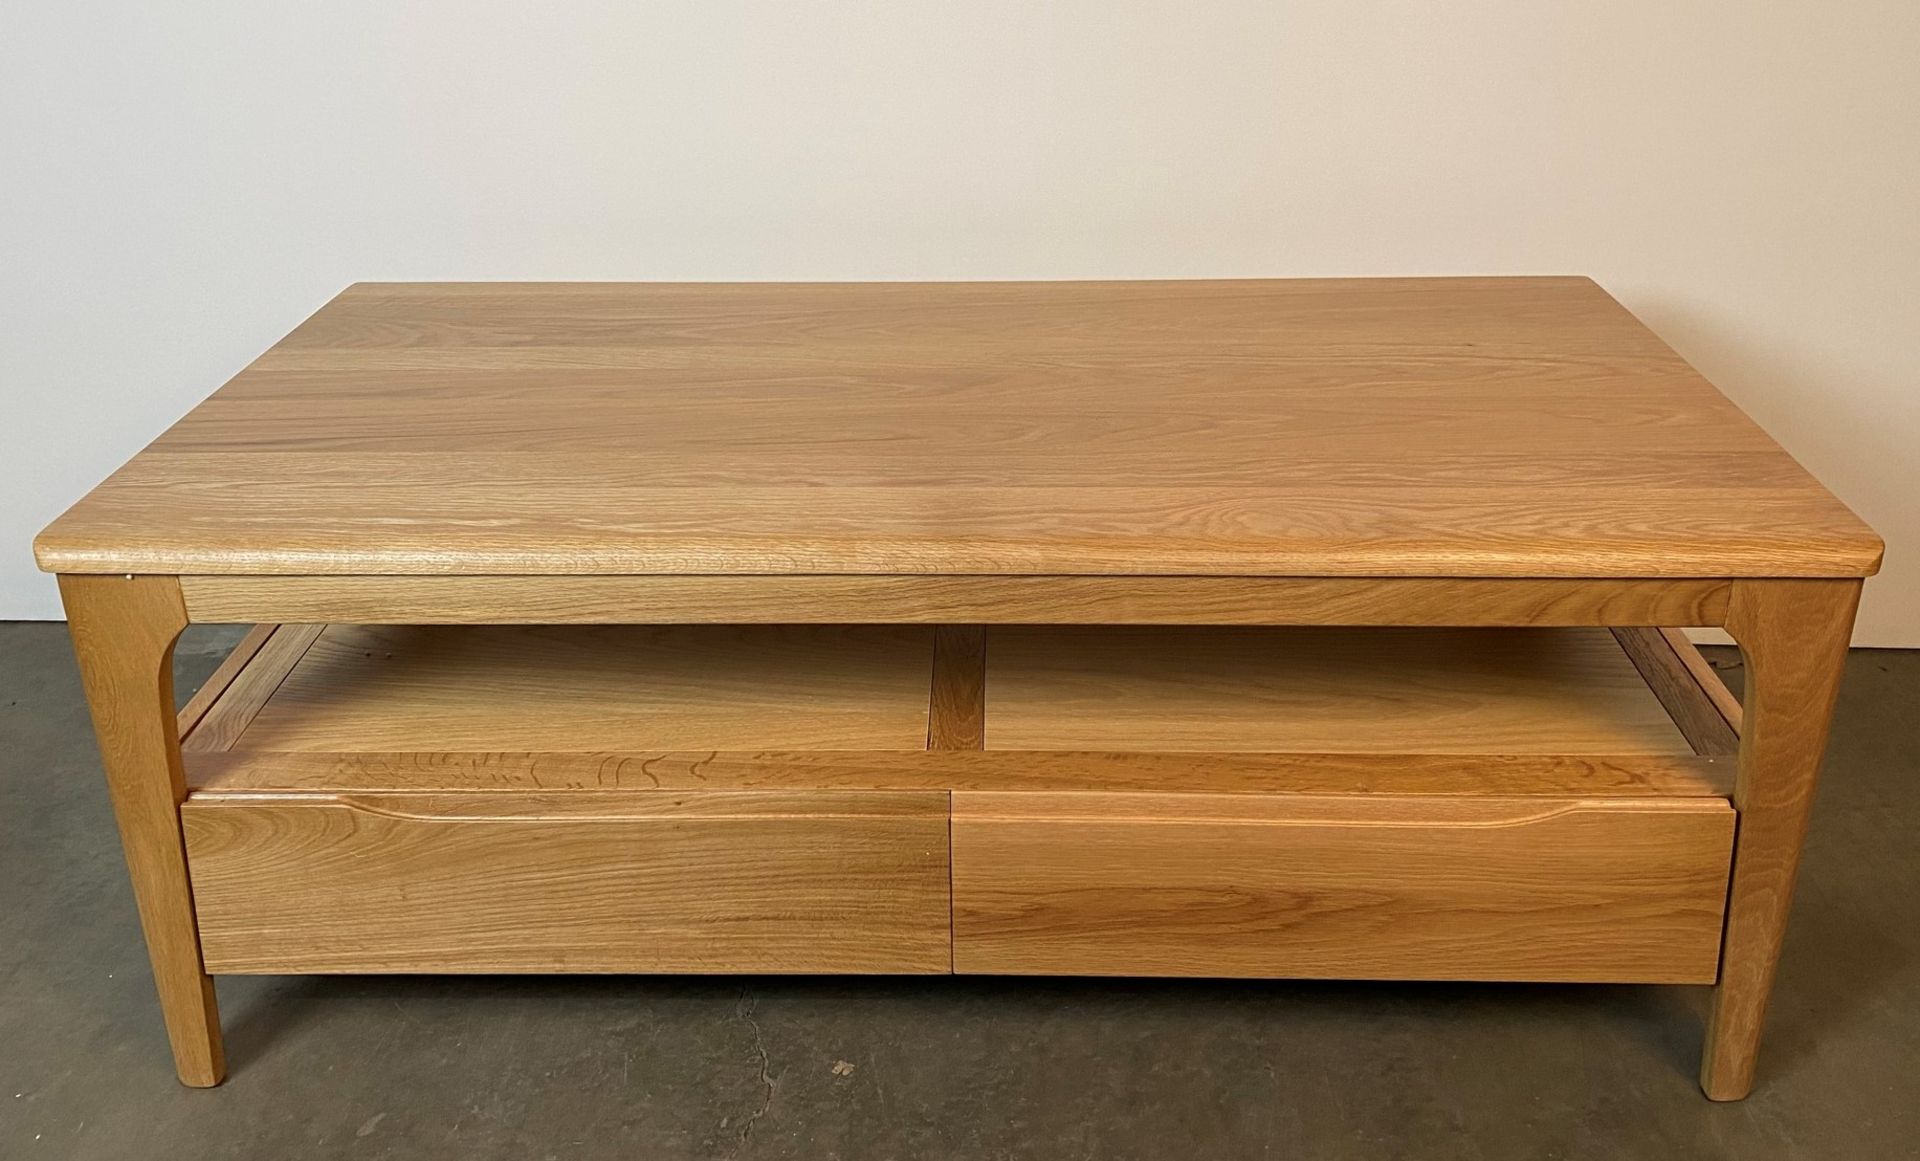 An Solid Oak + Phoenix 4 drawer coffee table - 120cm x 60cm x 45 cm